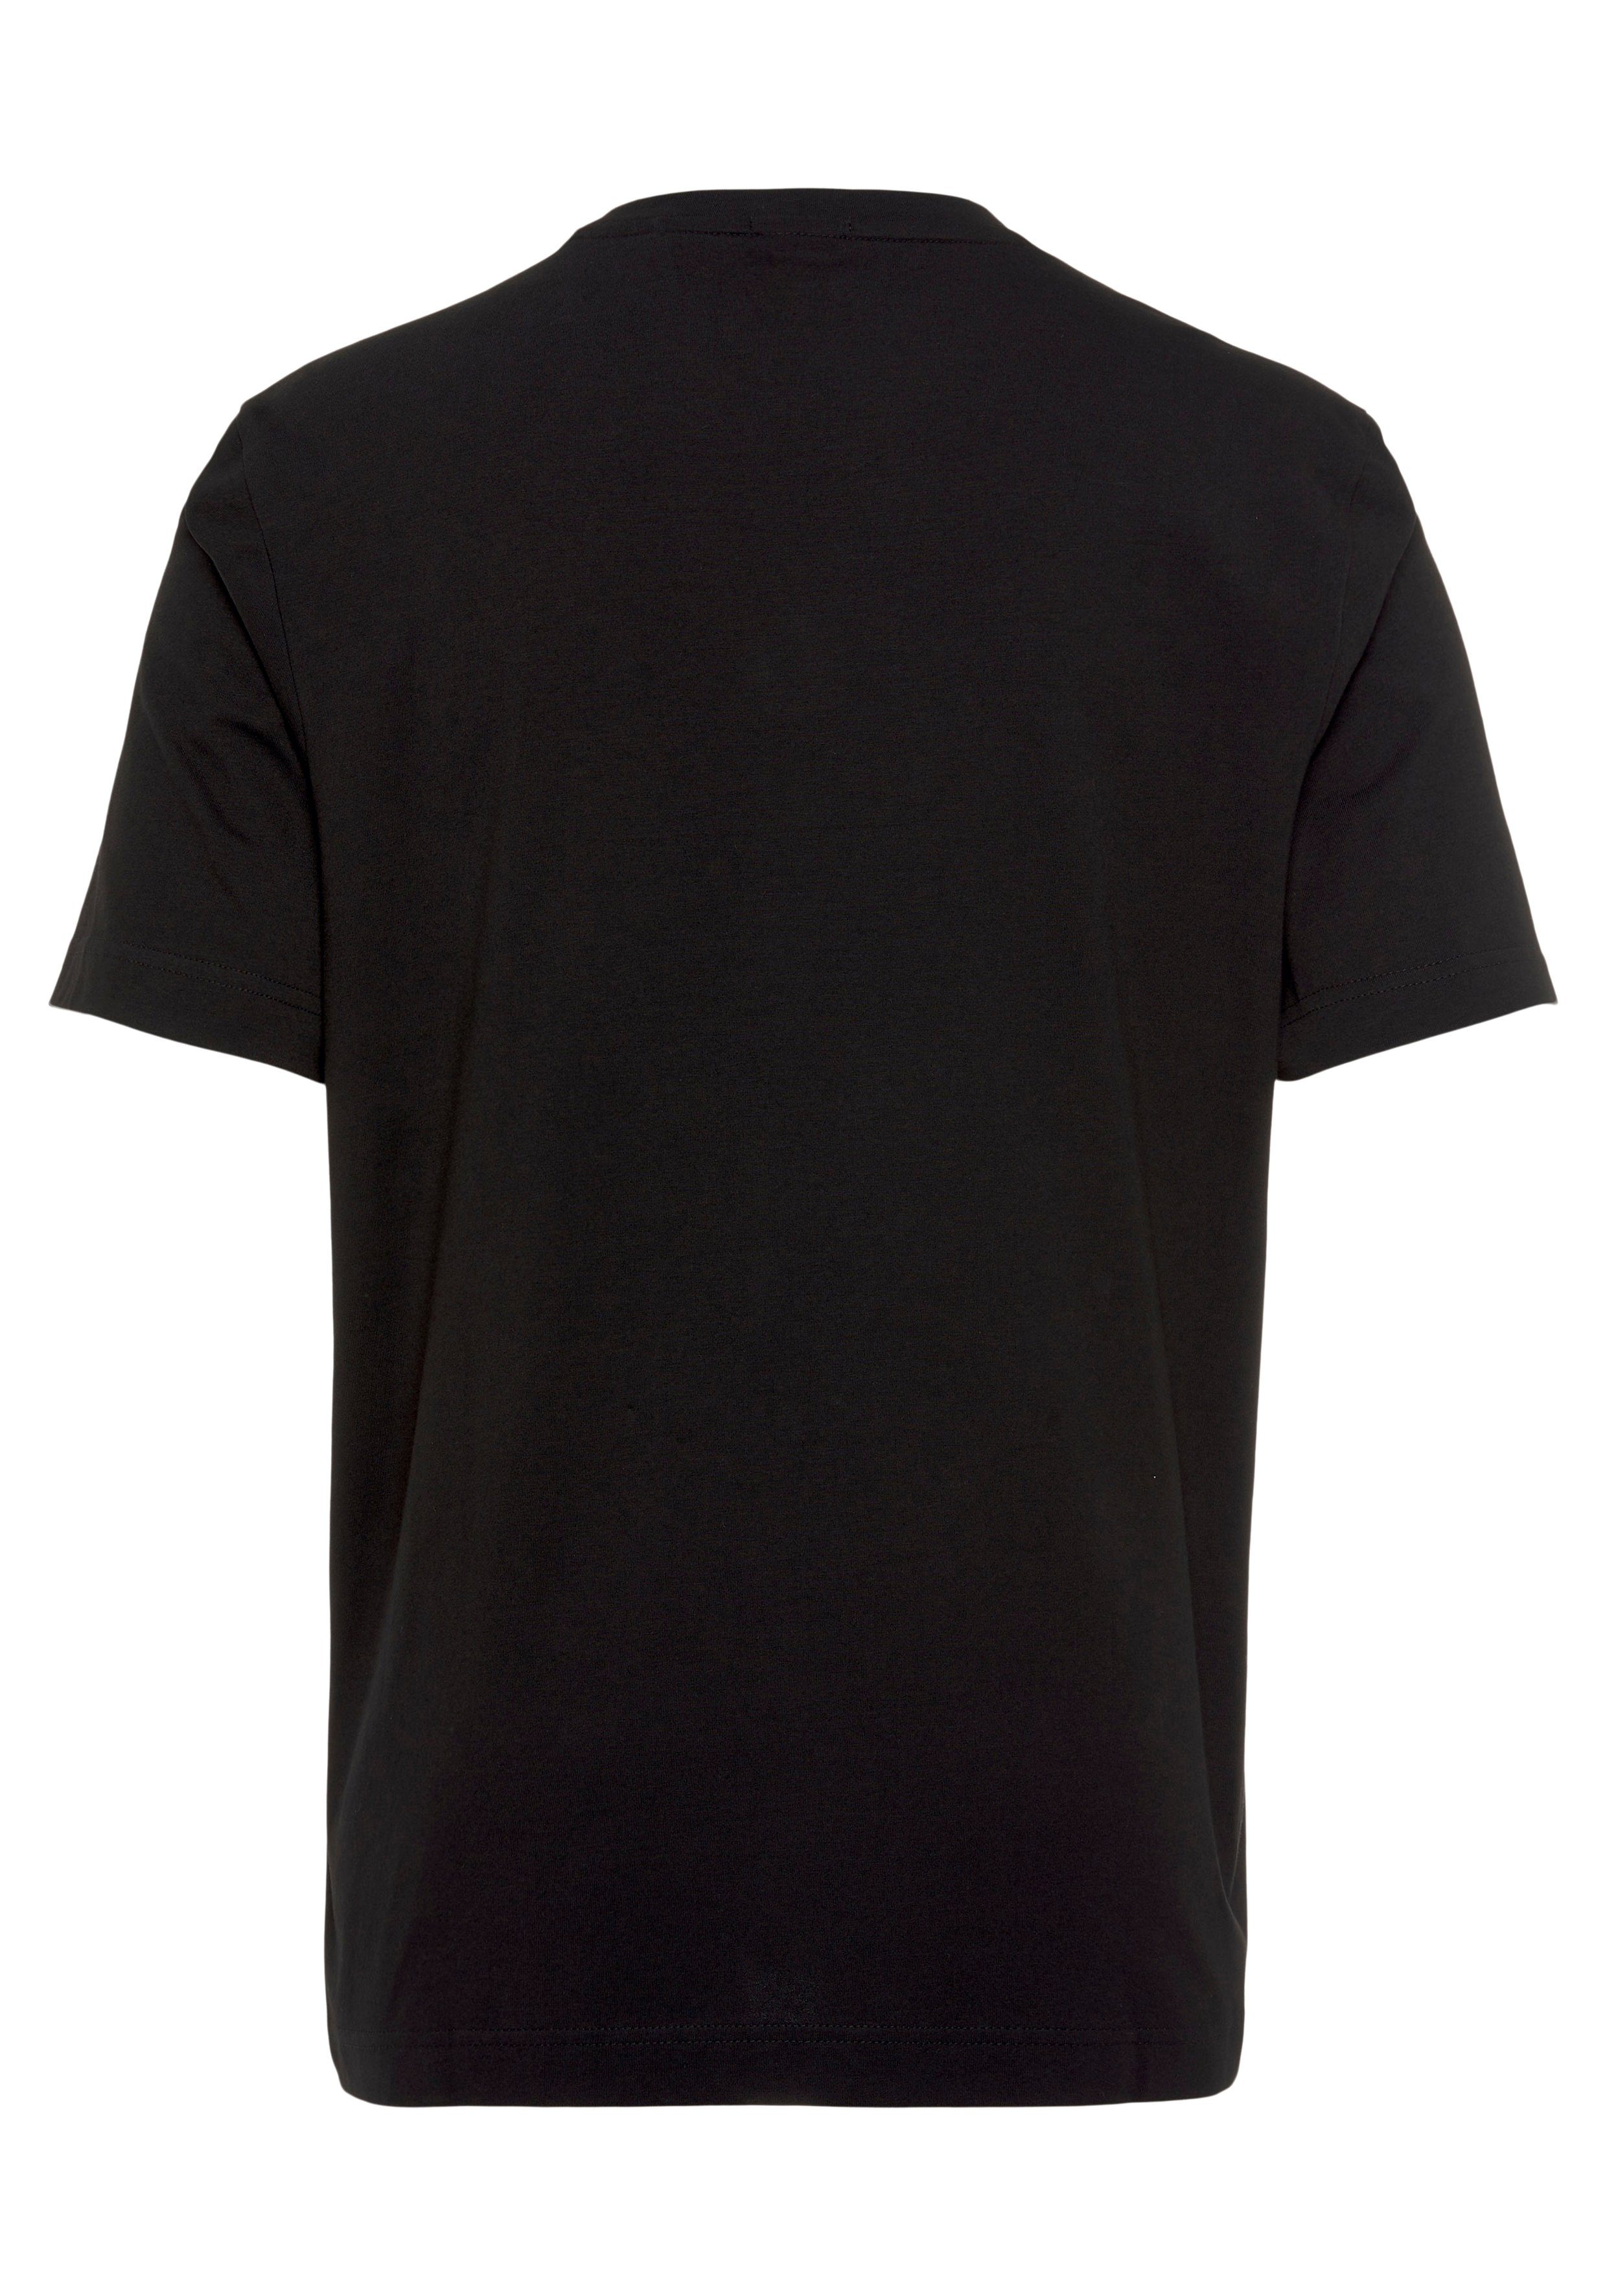 black001 BOSS Rundhalsausschnitt ORANGE mit T-Shirt TChup